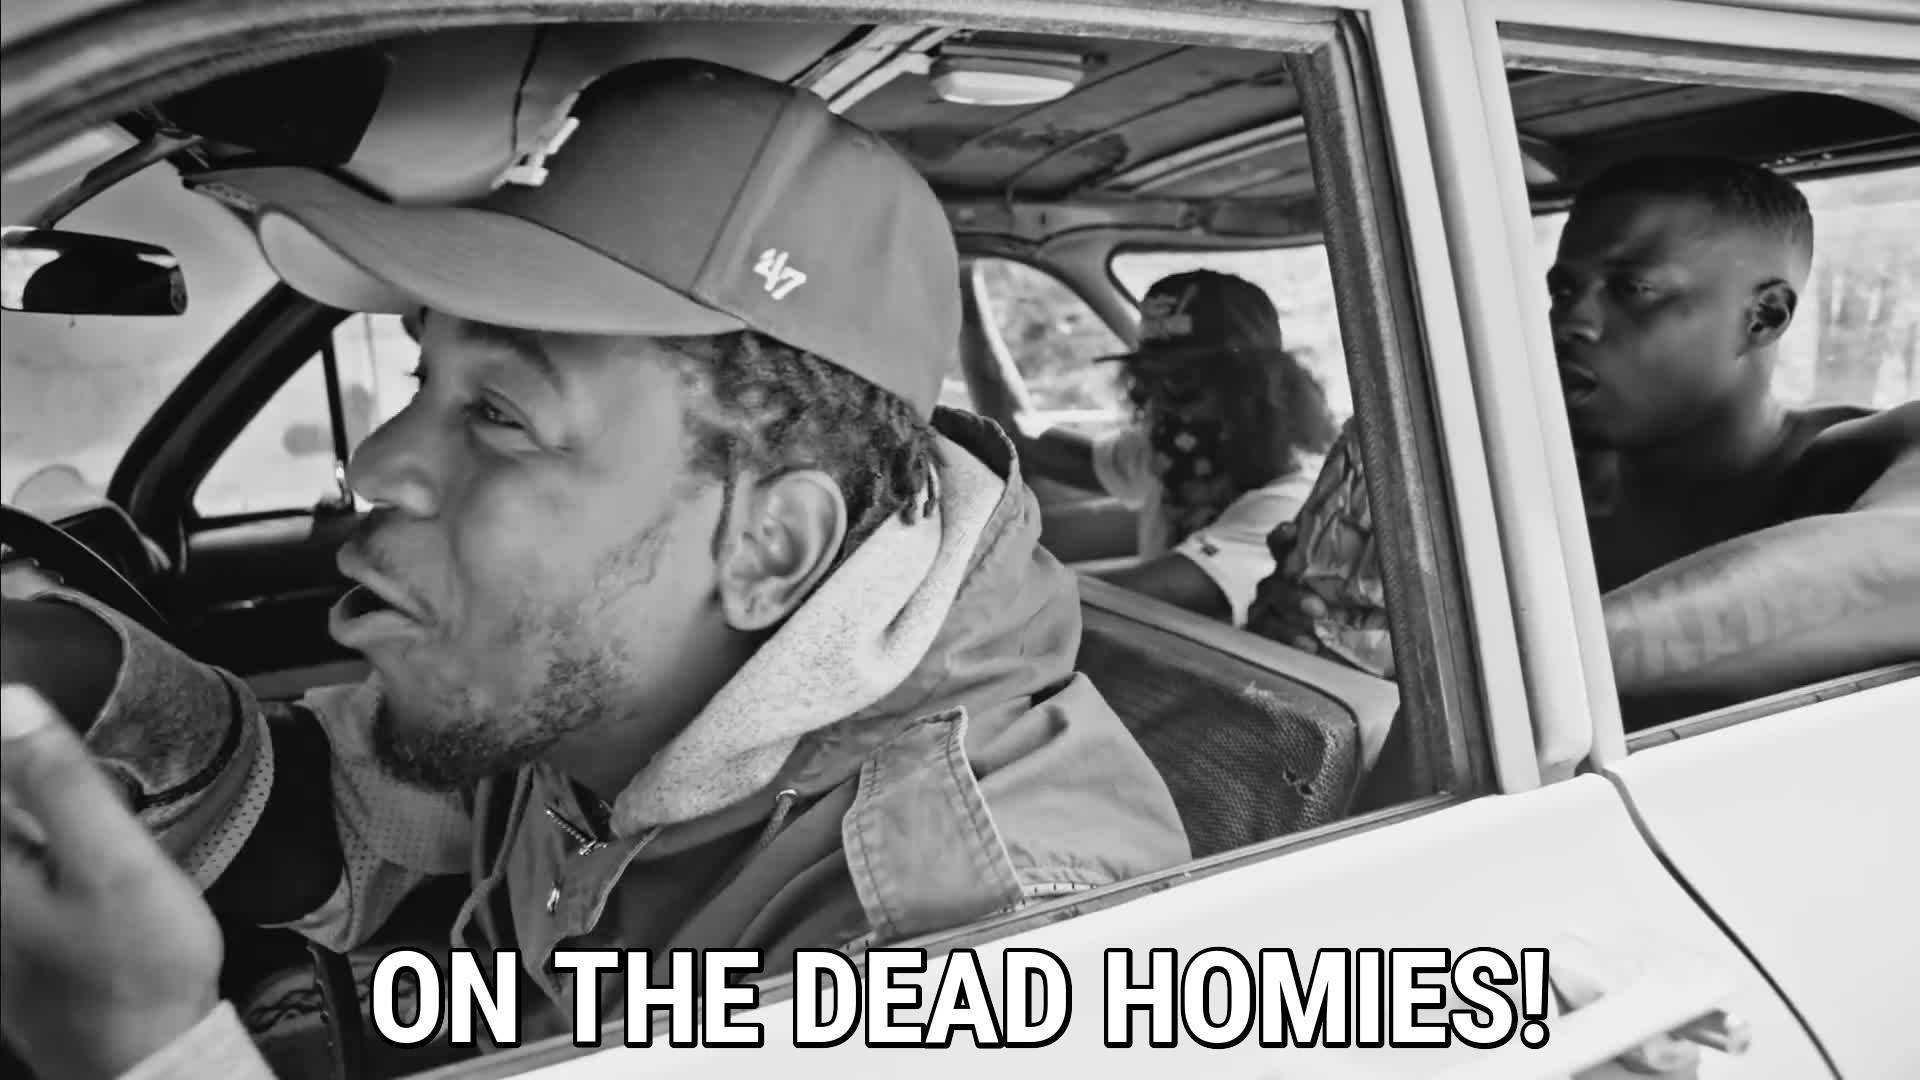 1920x1080 On the dead homies! / Kendrick Lamar